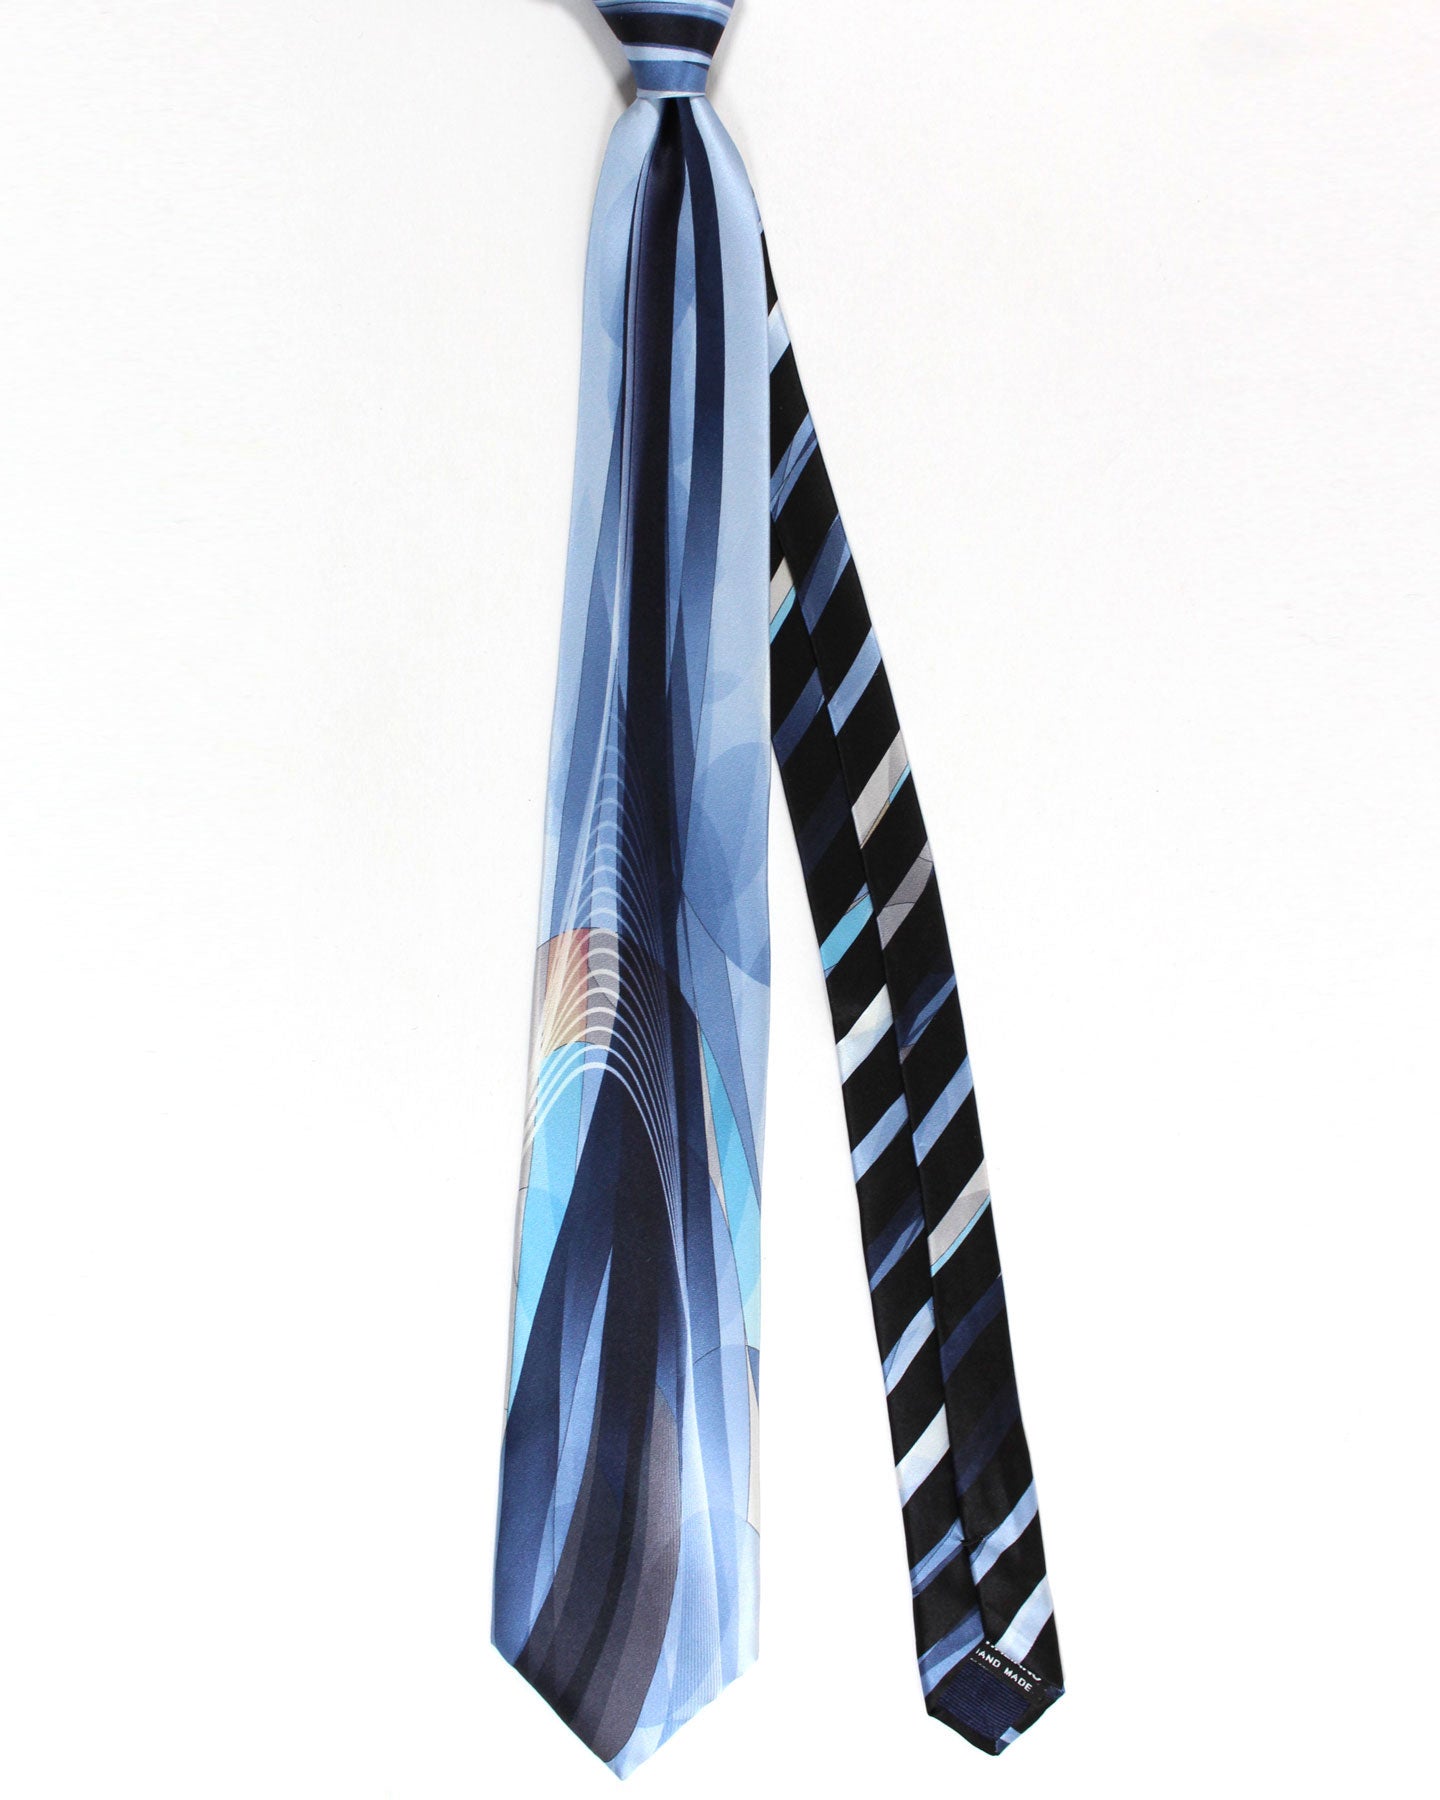 Vitaliano Pancaldi Silk Tie Blue Gray Swirl Design